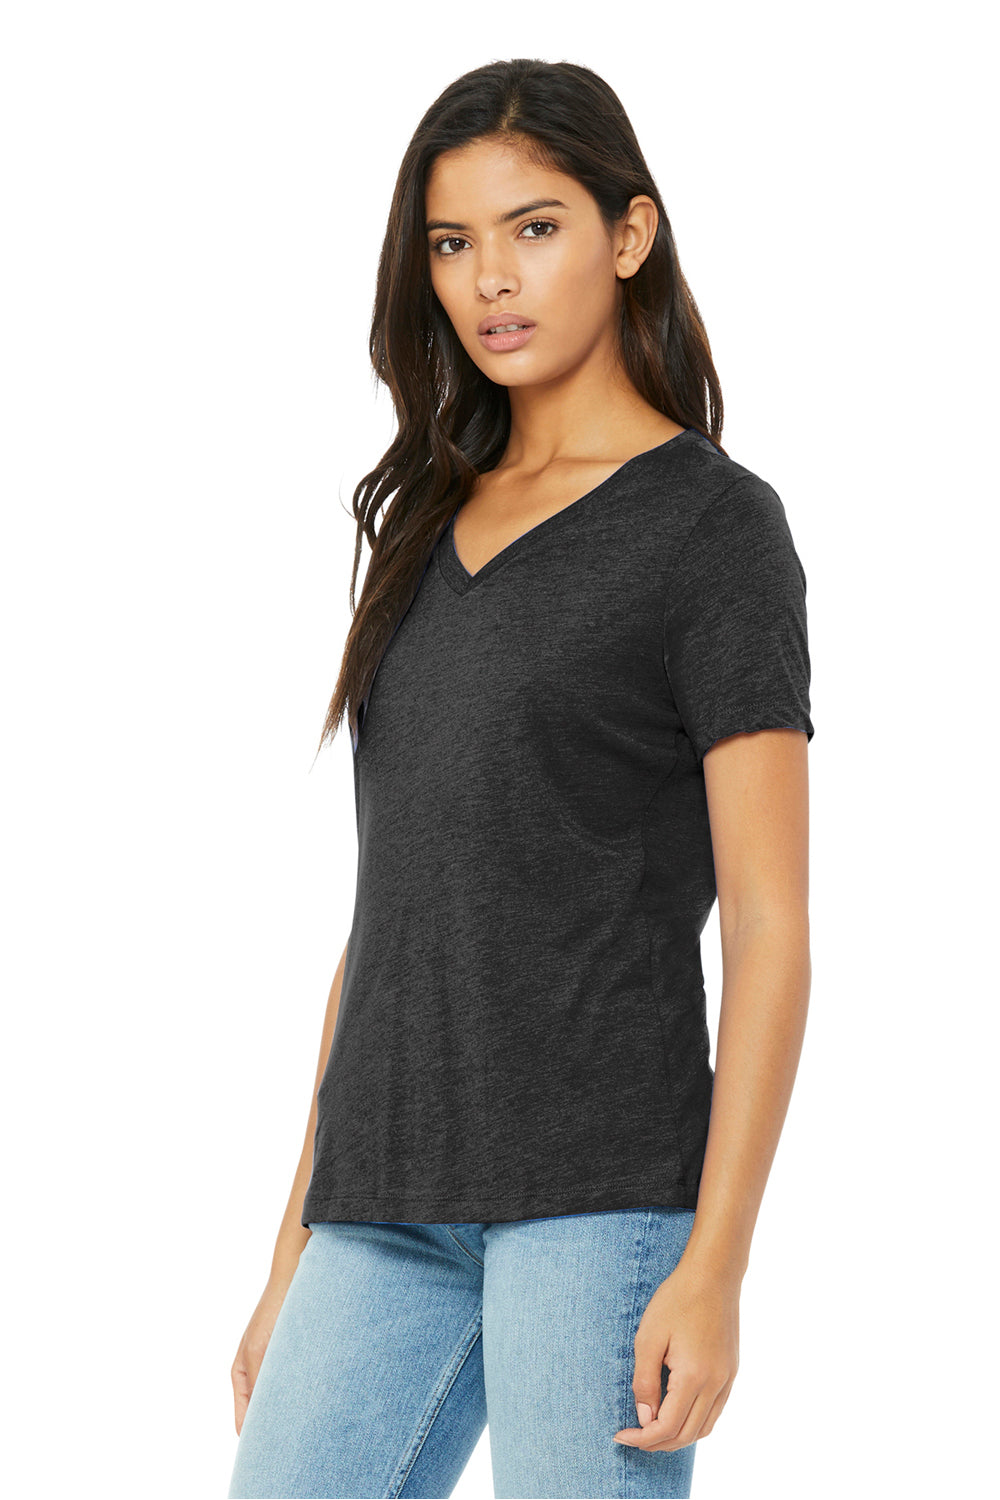 Bella + Canvas BC6415 Womens Short Sleeve V-Neck T-Shirt Charcoal Black Model 3Q